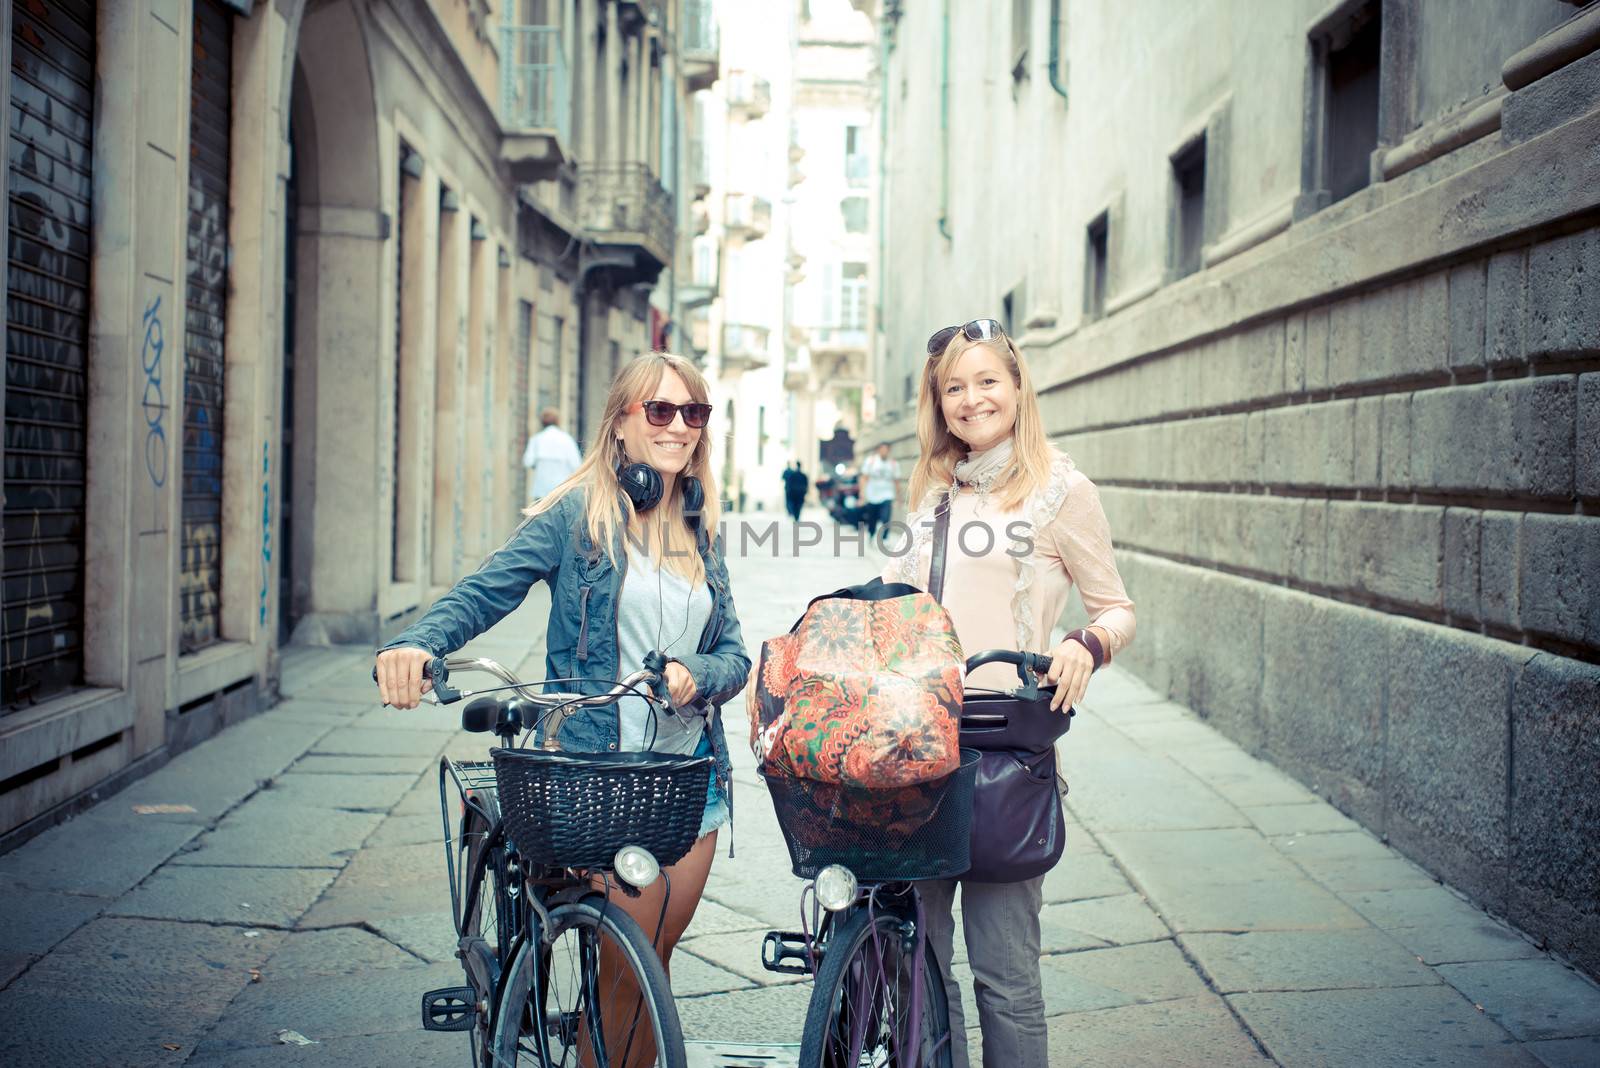 two beautiful blonde women shopping on bike by peus